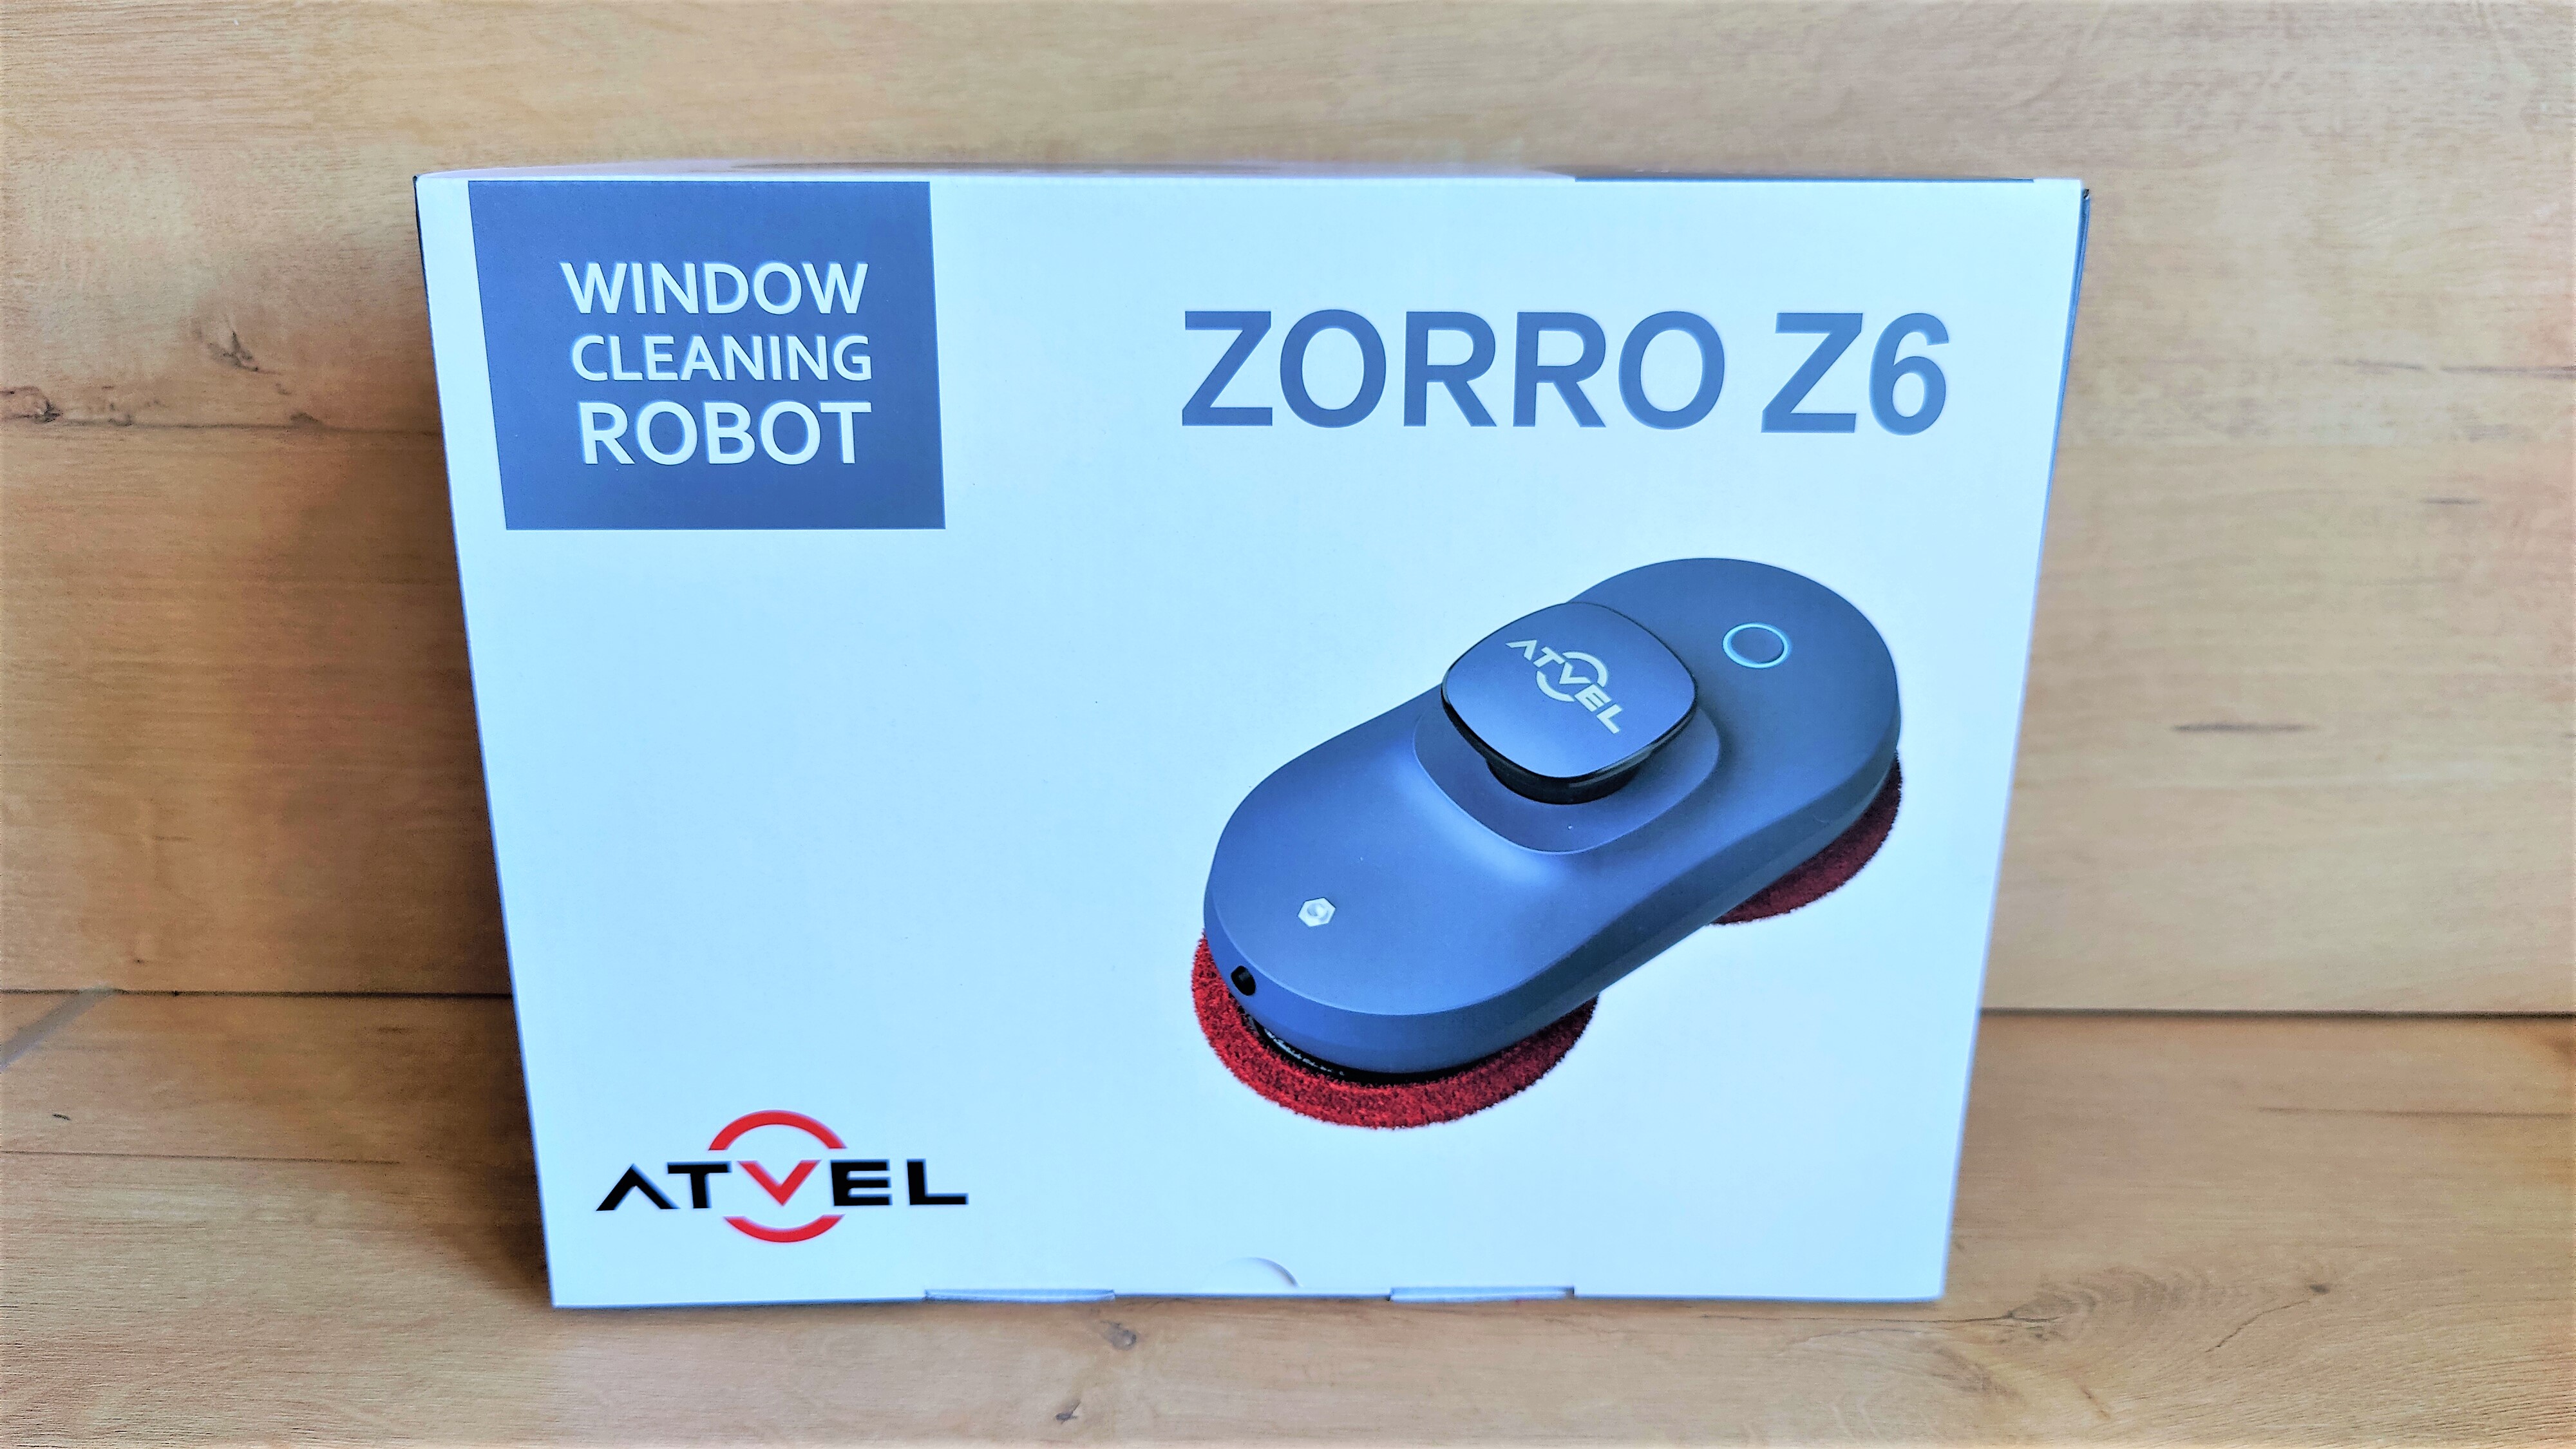 Робот для мытья окон atvel zorro z6. Hj,JN vjqobratvel Zorro z6.